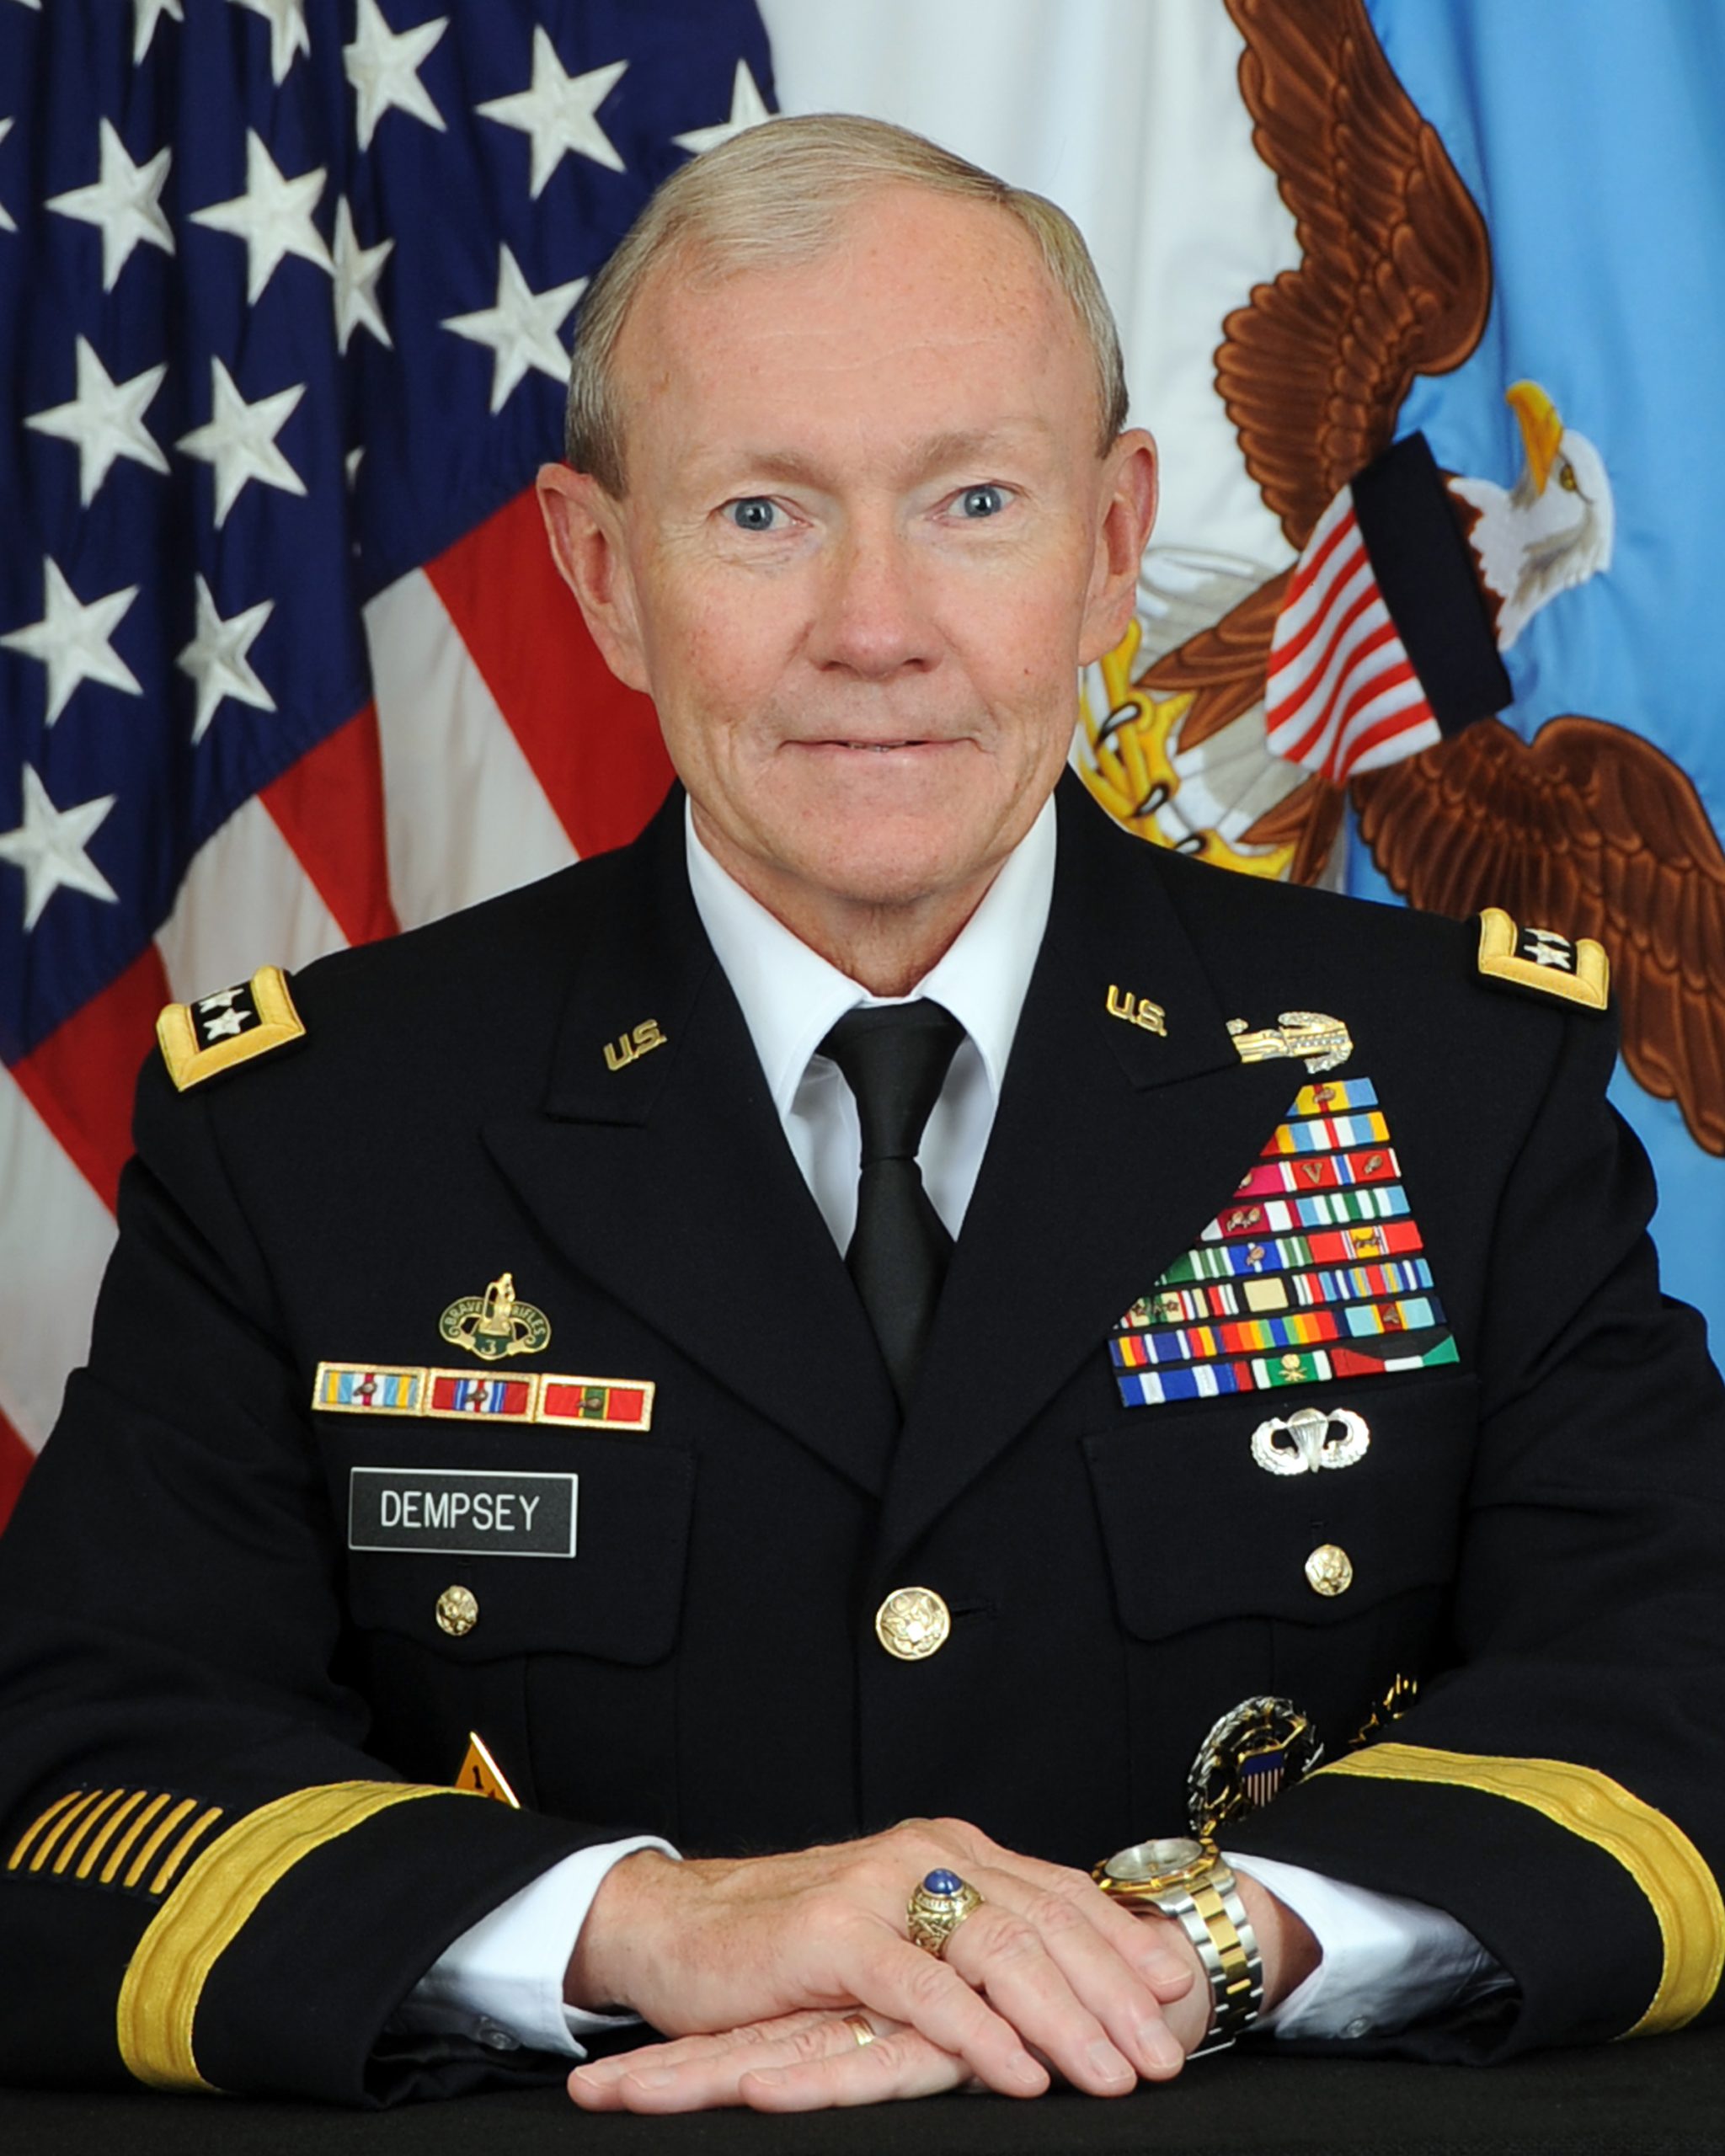 Portrait of Gen. Martin Dempsey in uniform